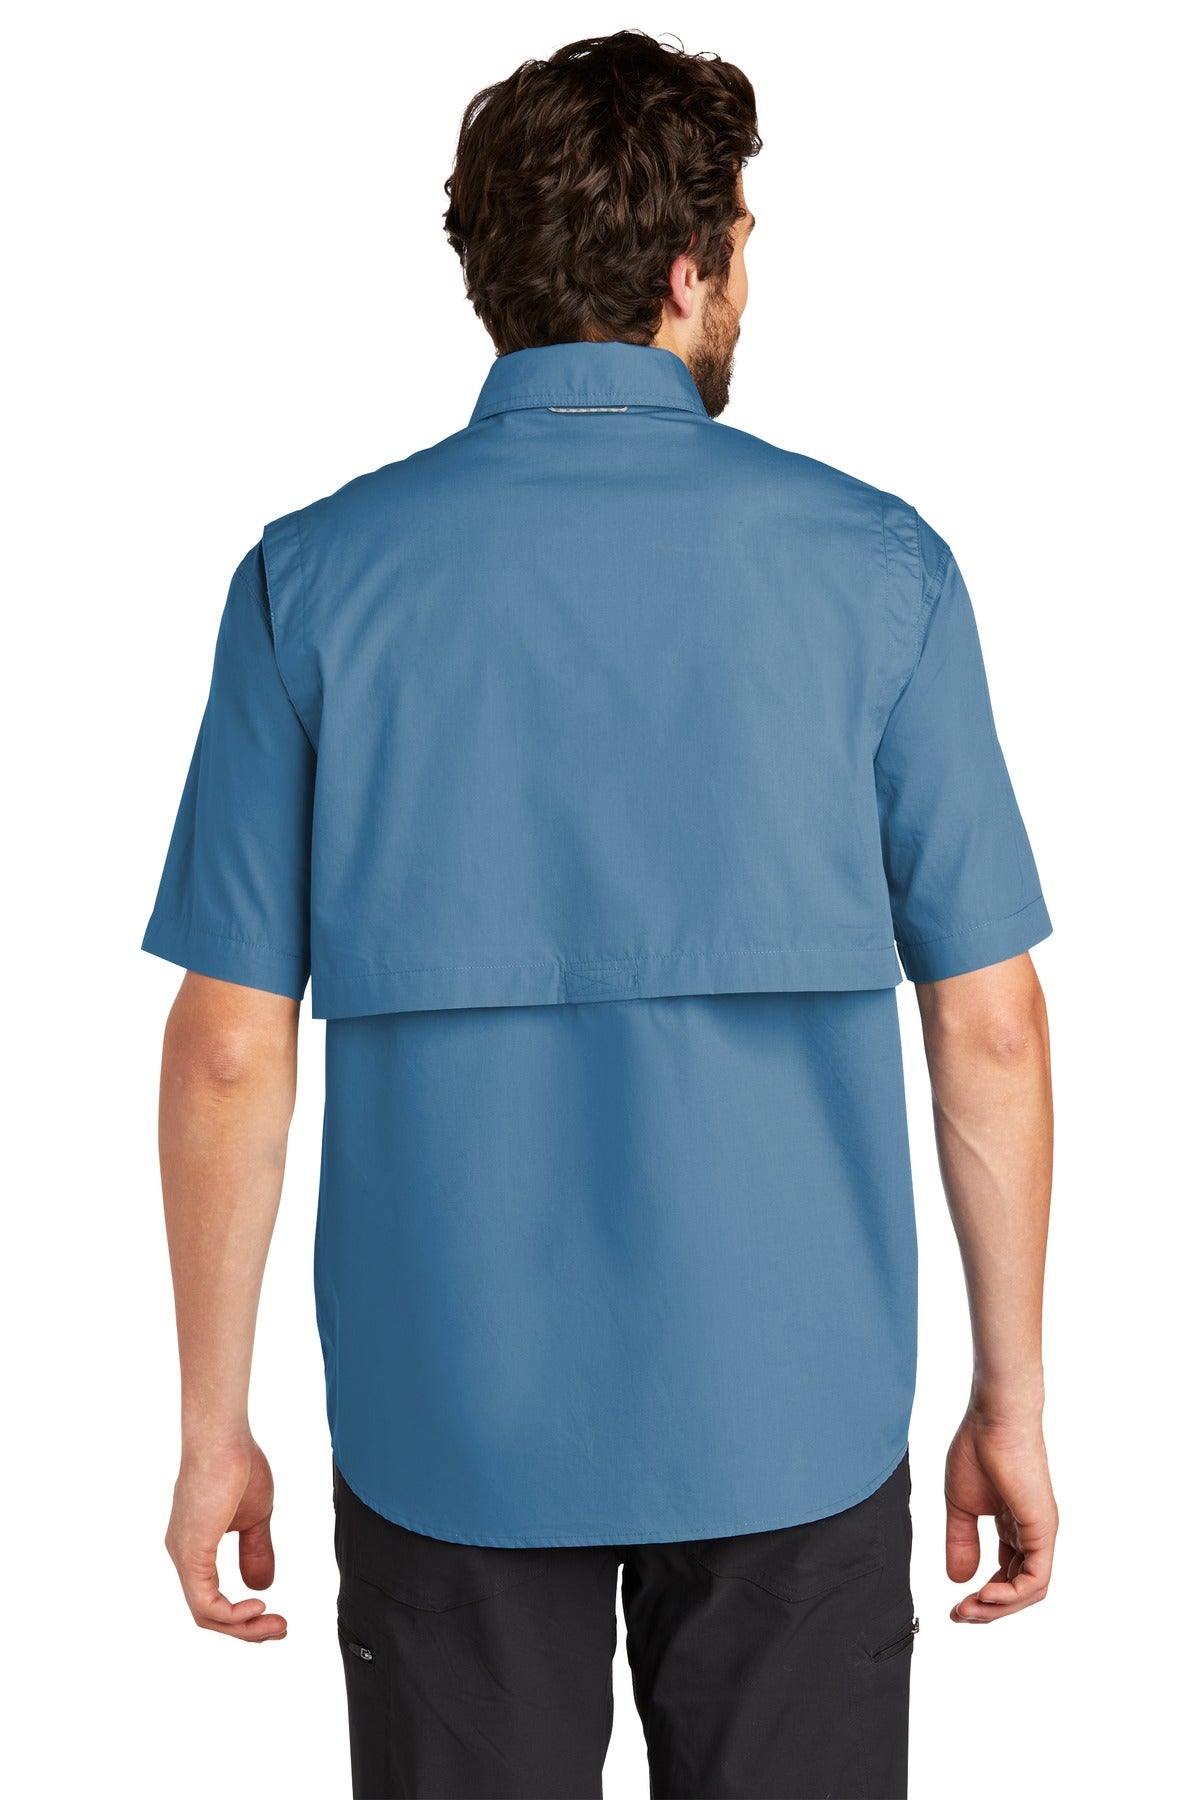 Eddie Bauer® - Short Sleeve Fishing Shirt. EB608 - DFW Impression